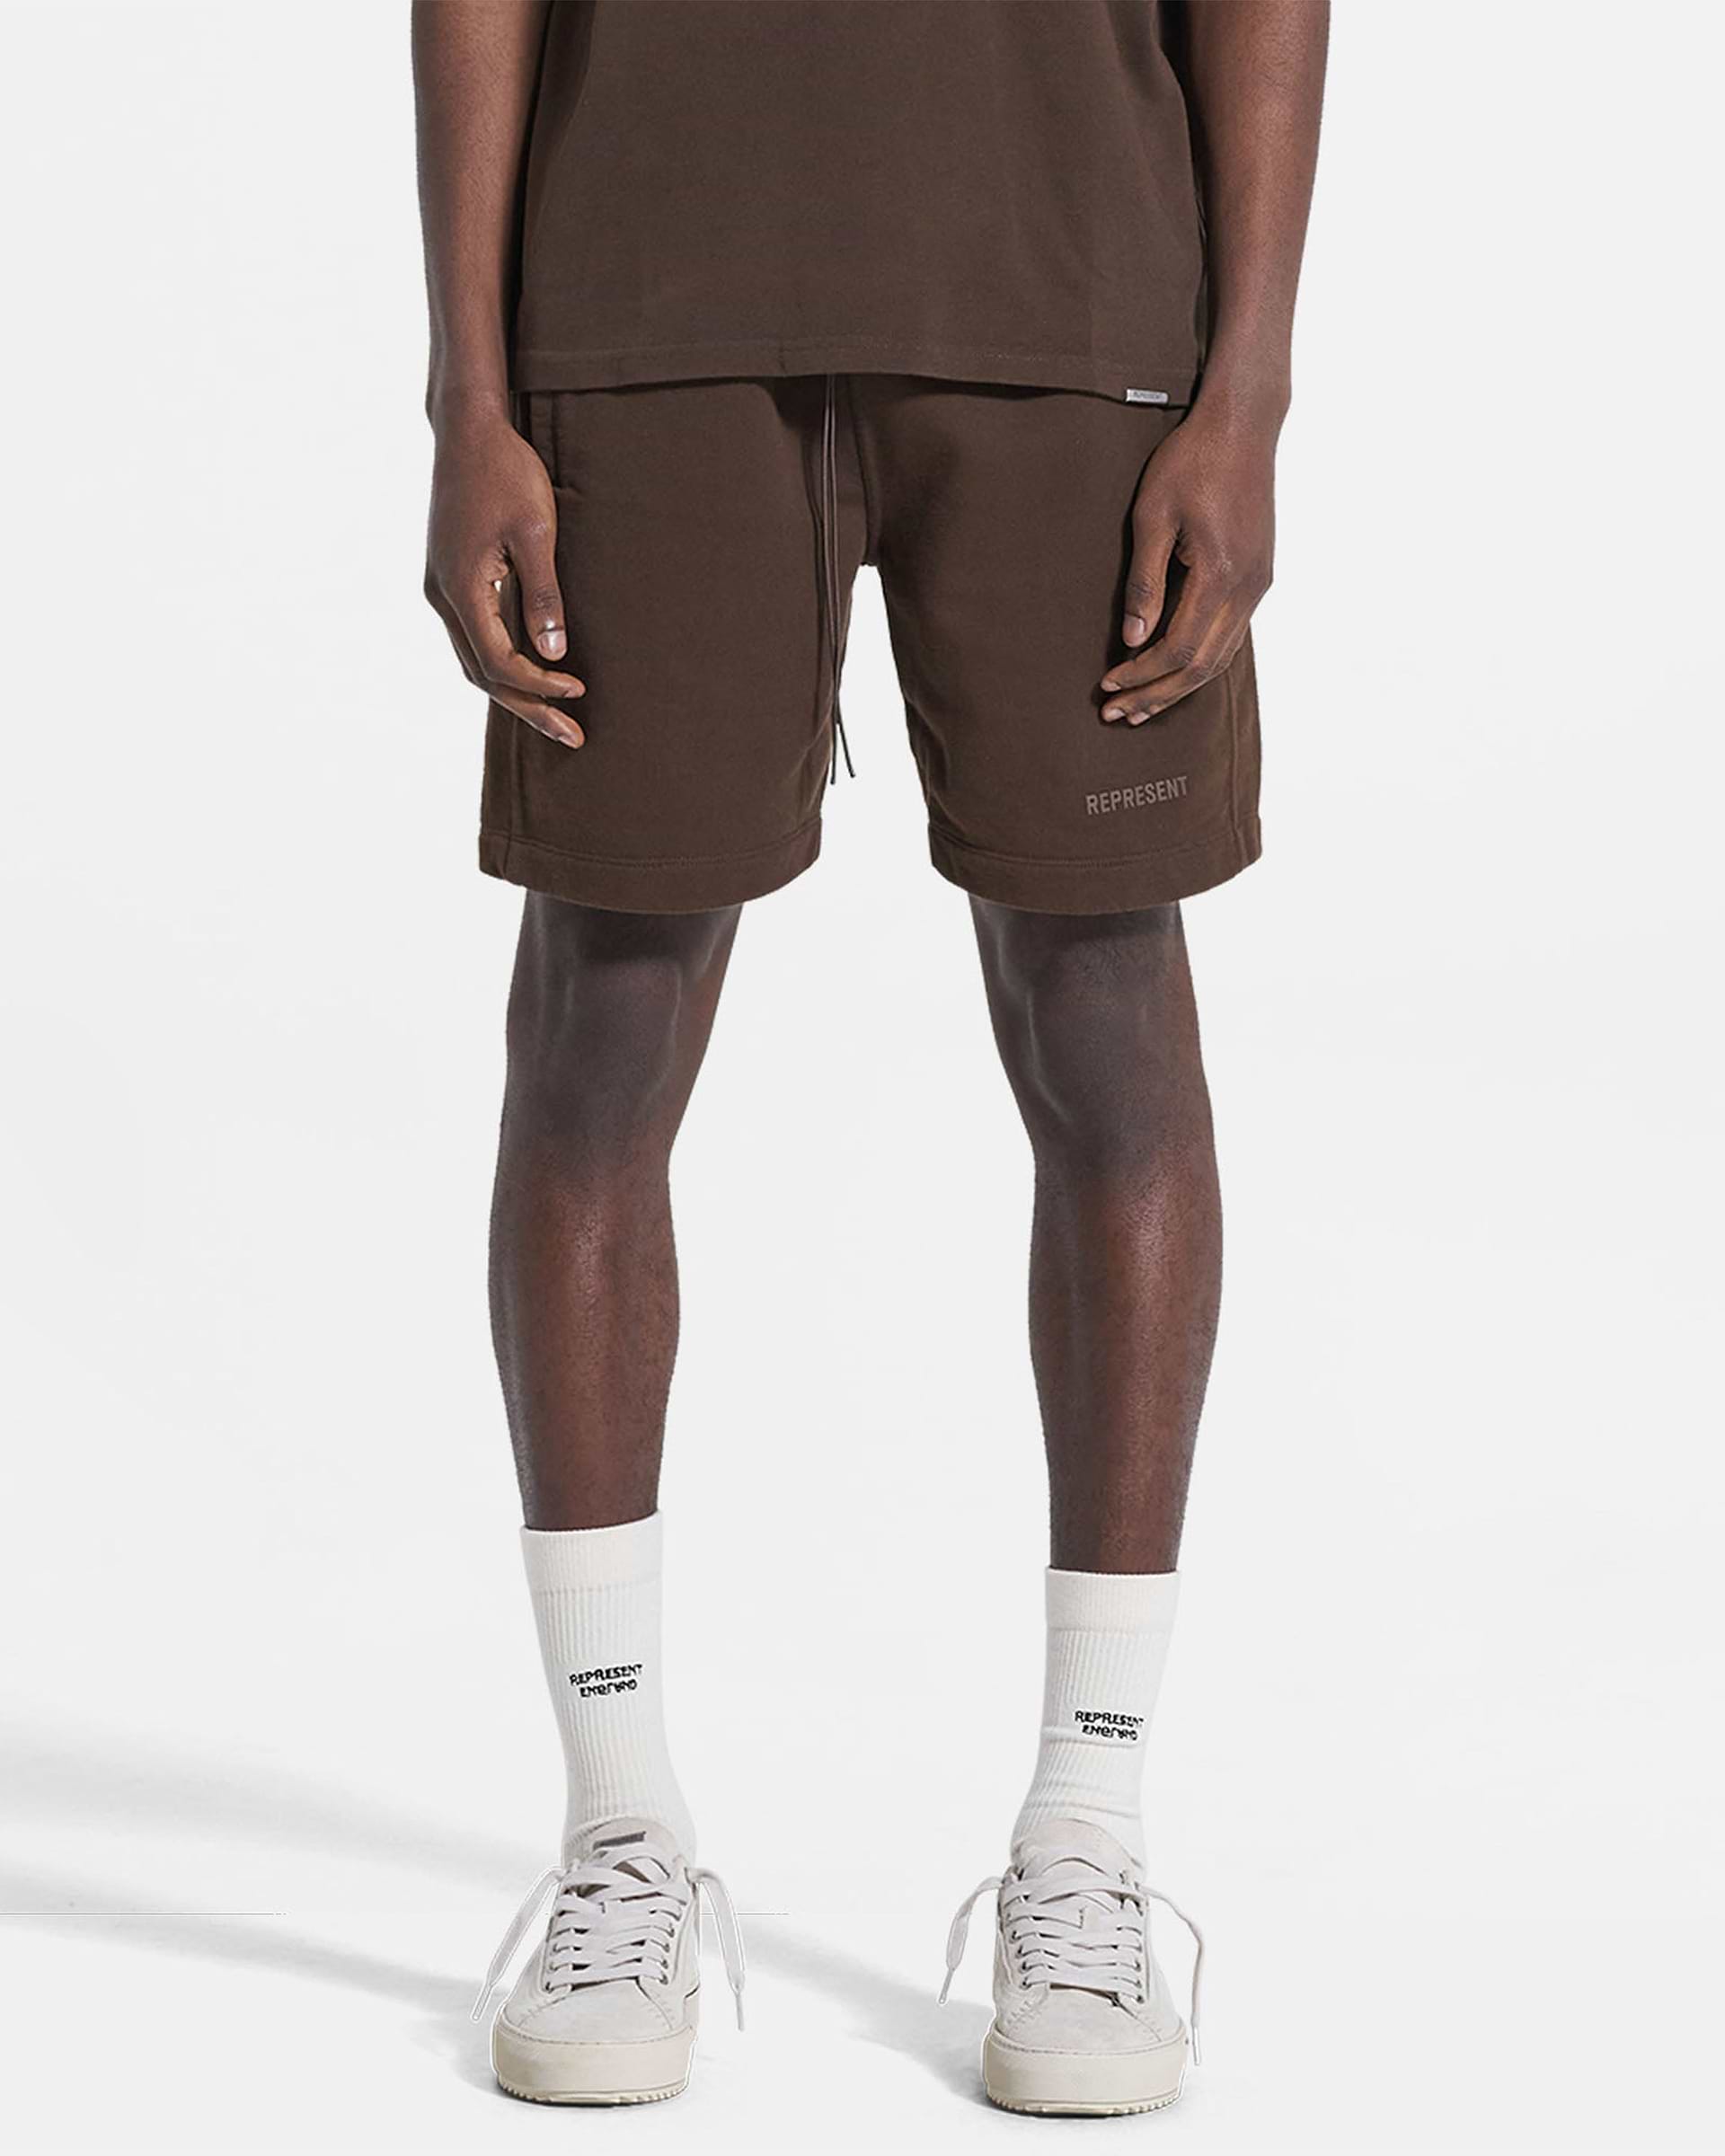 Blank Shorts | Brown Shorts BLANKS | Represent Clo